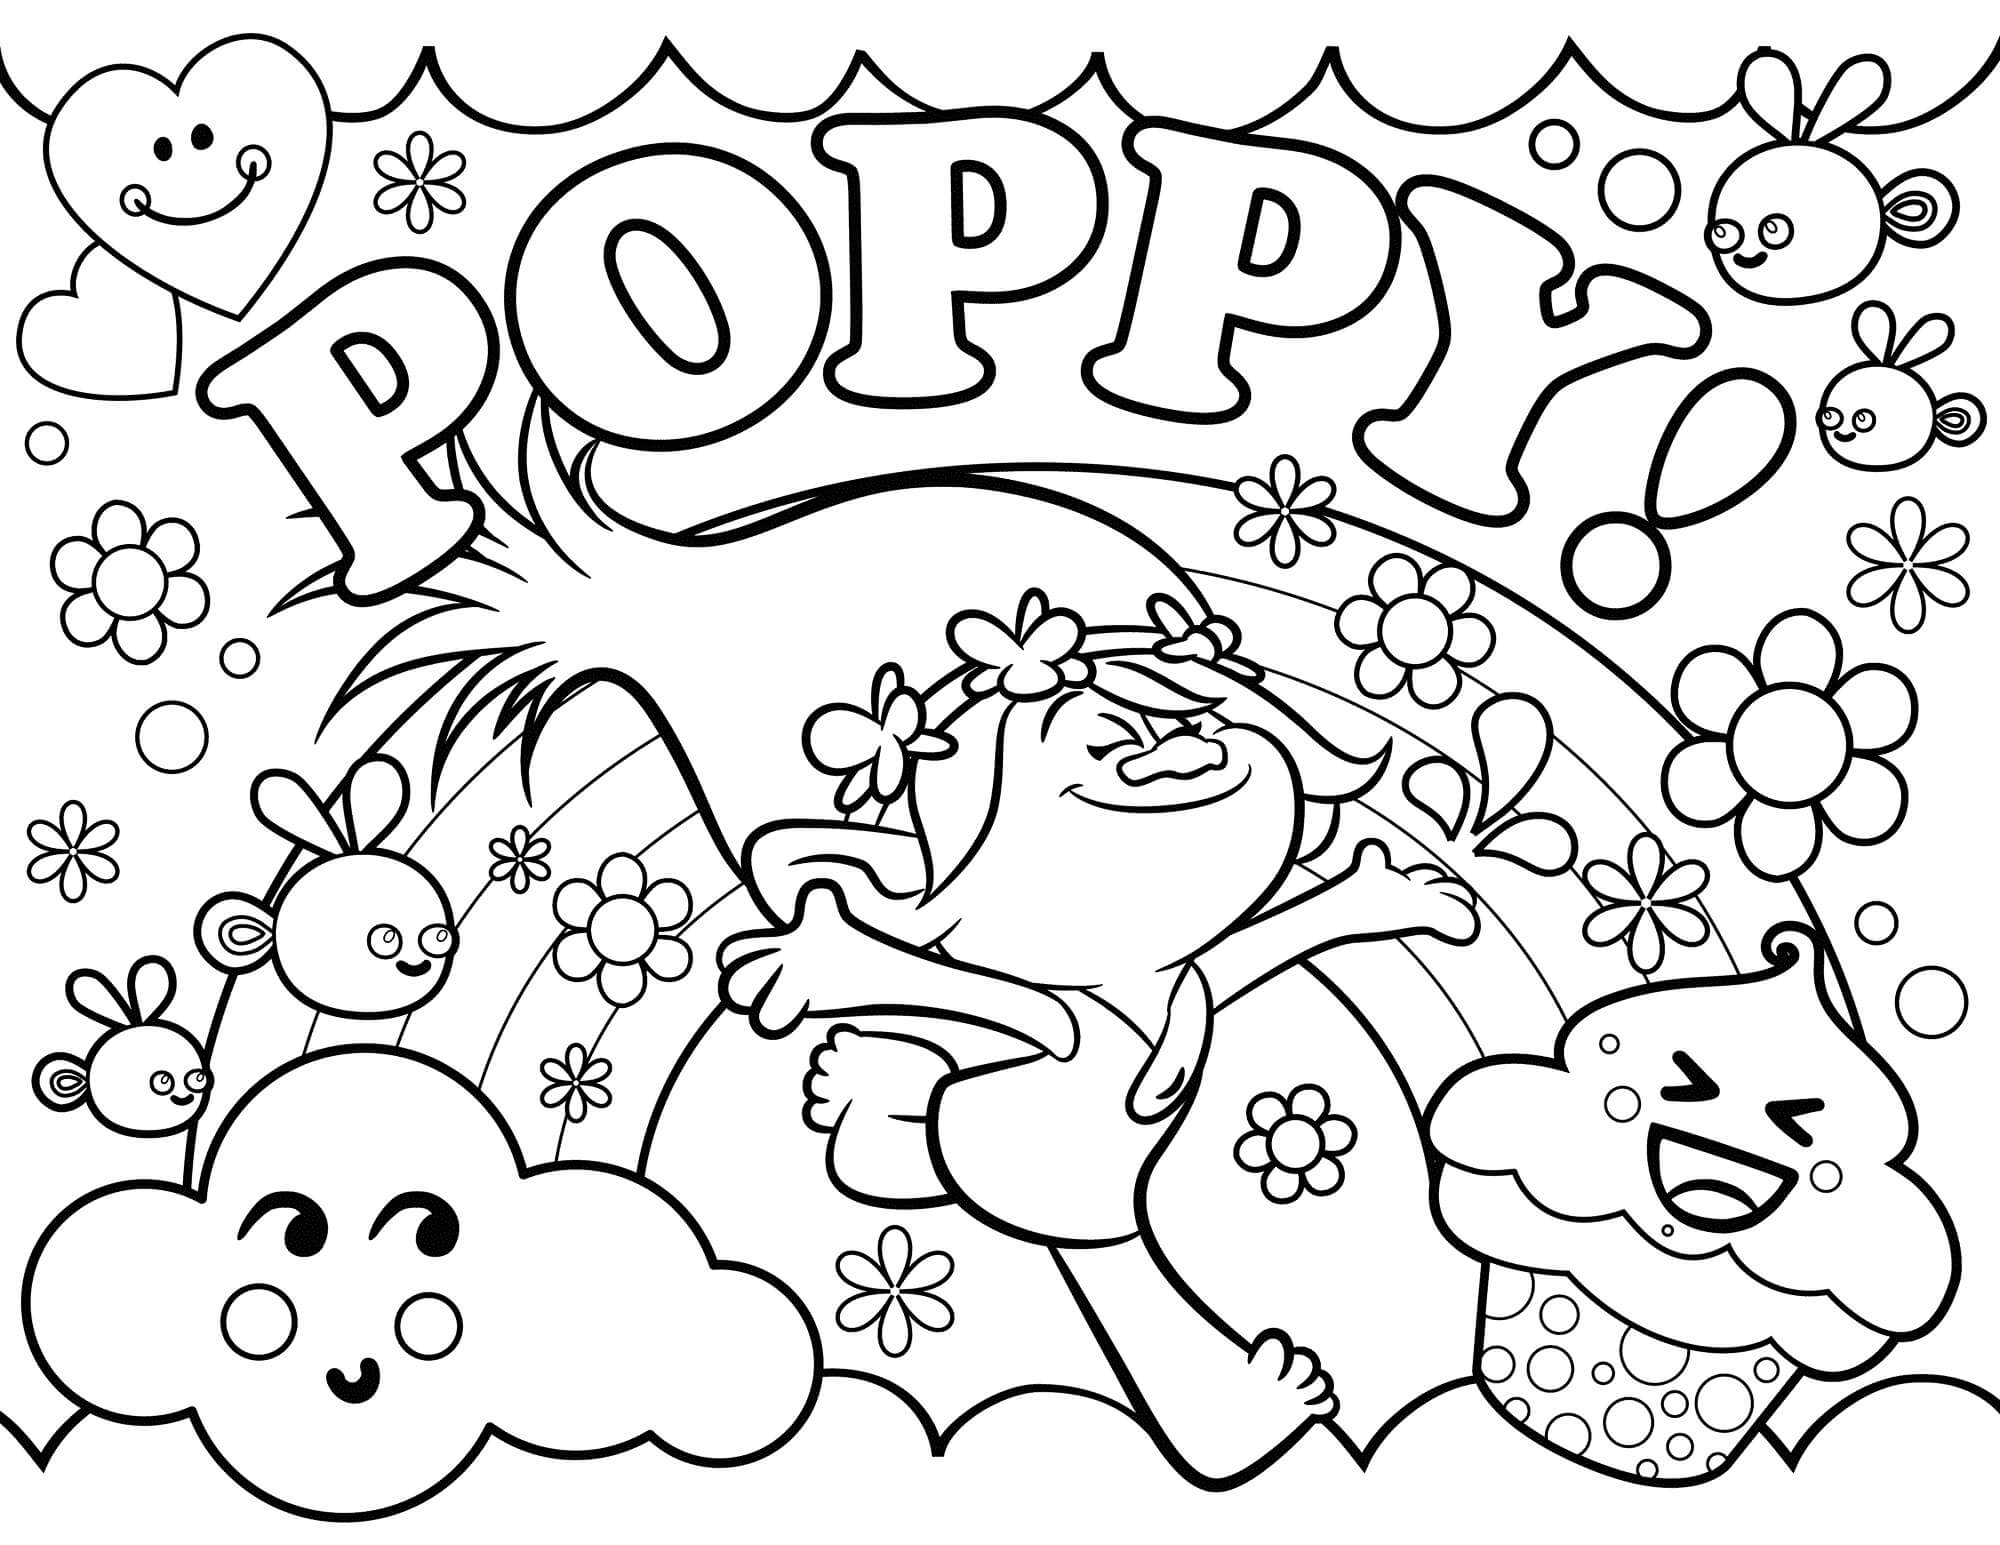 Dibujos de Poppy and Friends para colorear